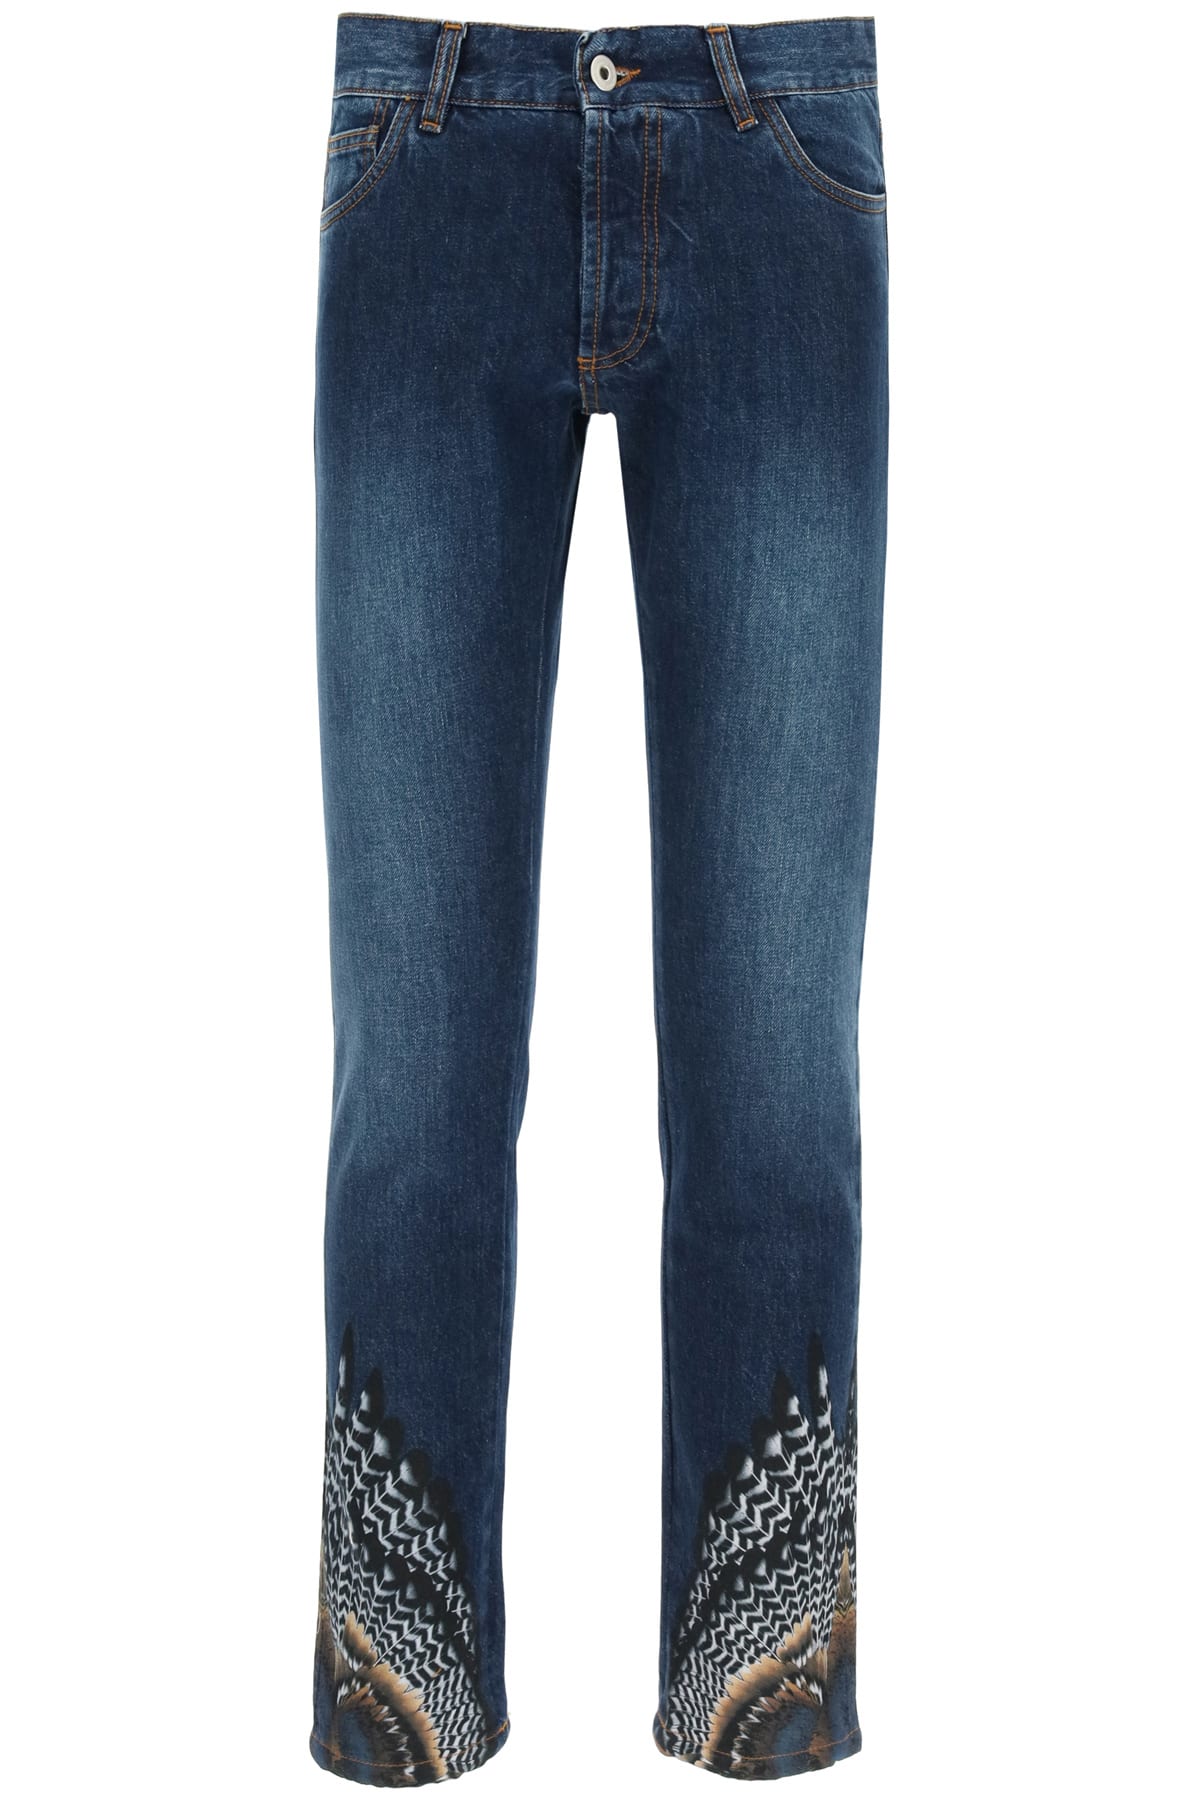 Marcelo Burlon Slim Jeans With Wings Print